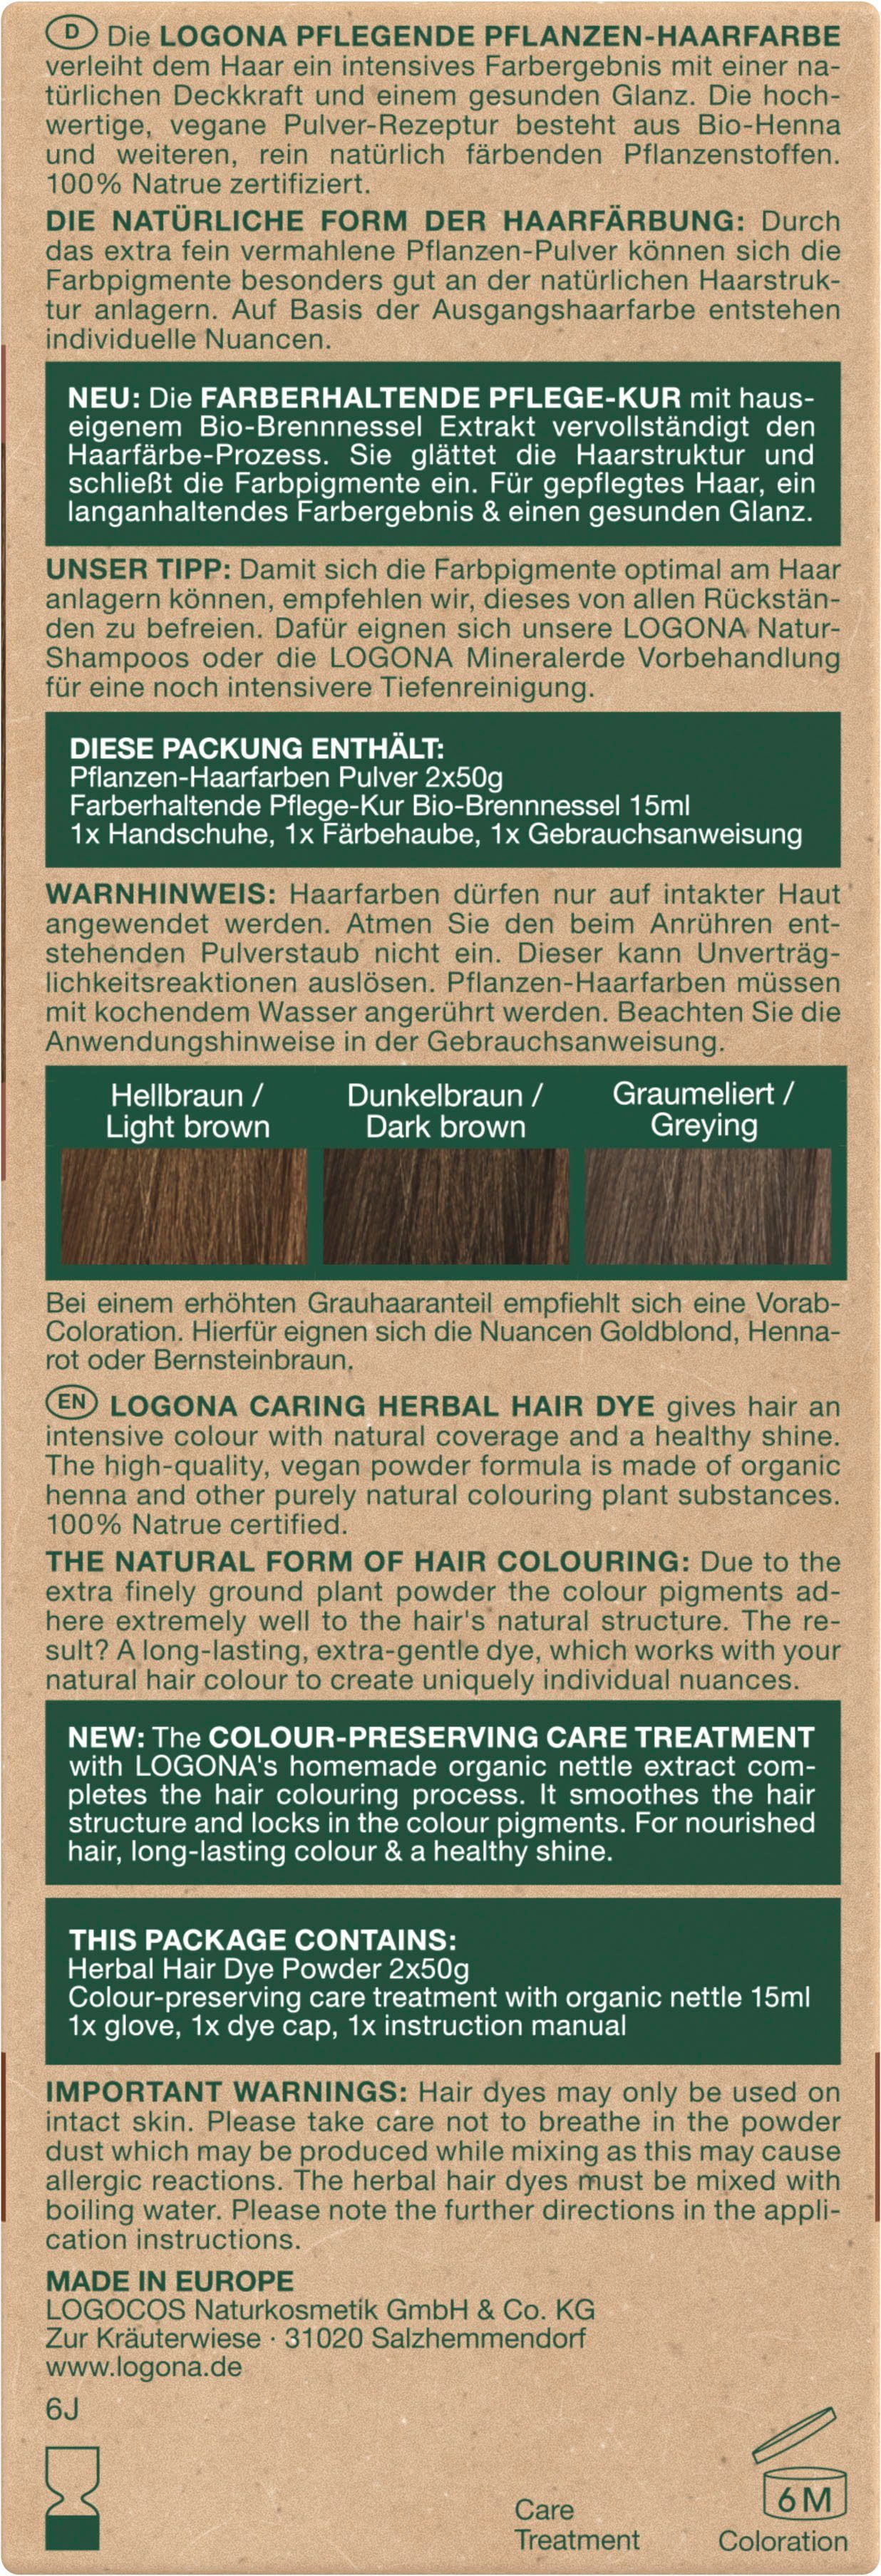 LOGONA Haarfarbe Pflanzen-Haarfarbe Pulver 08 Aschbraun